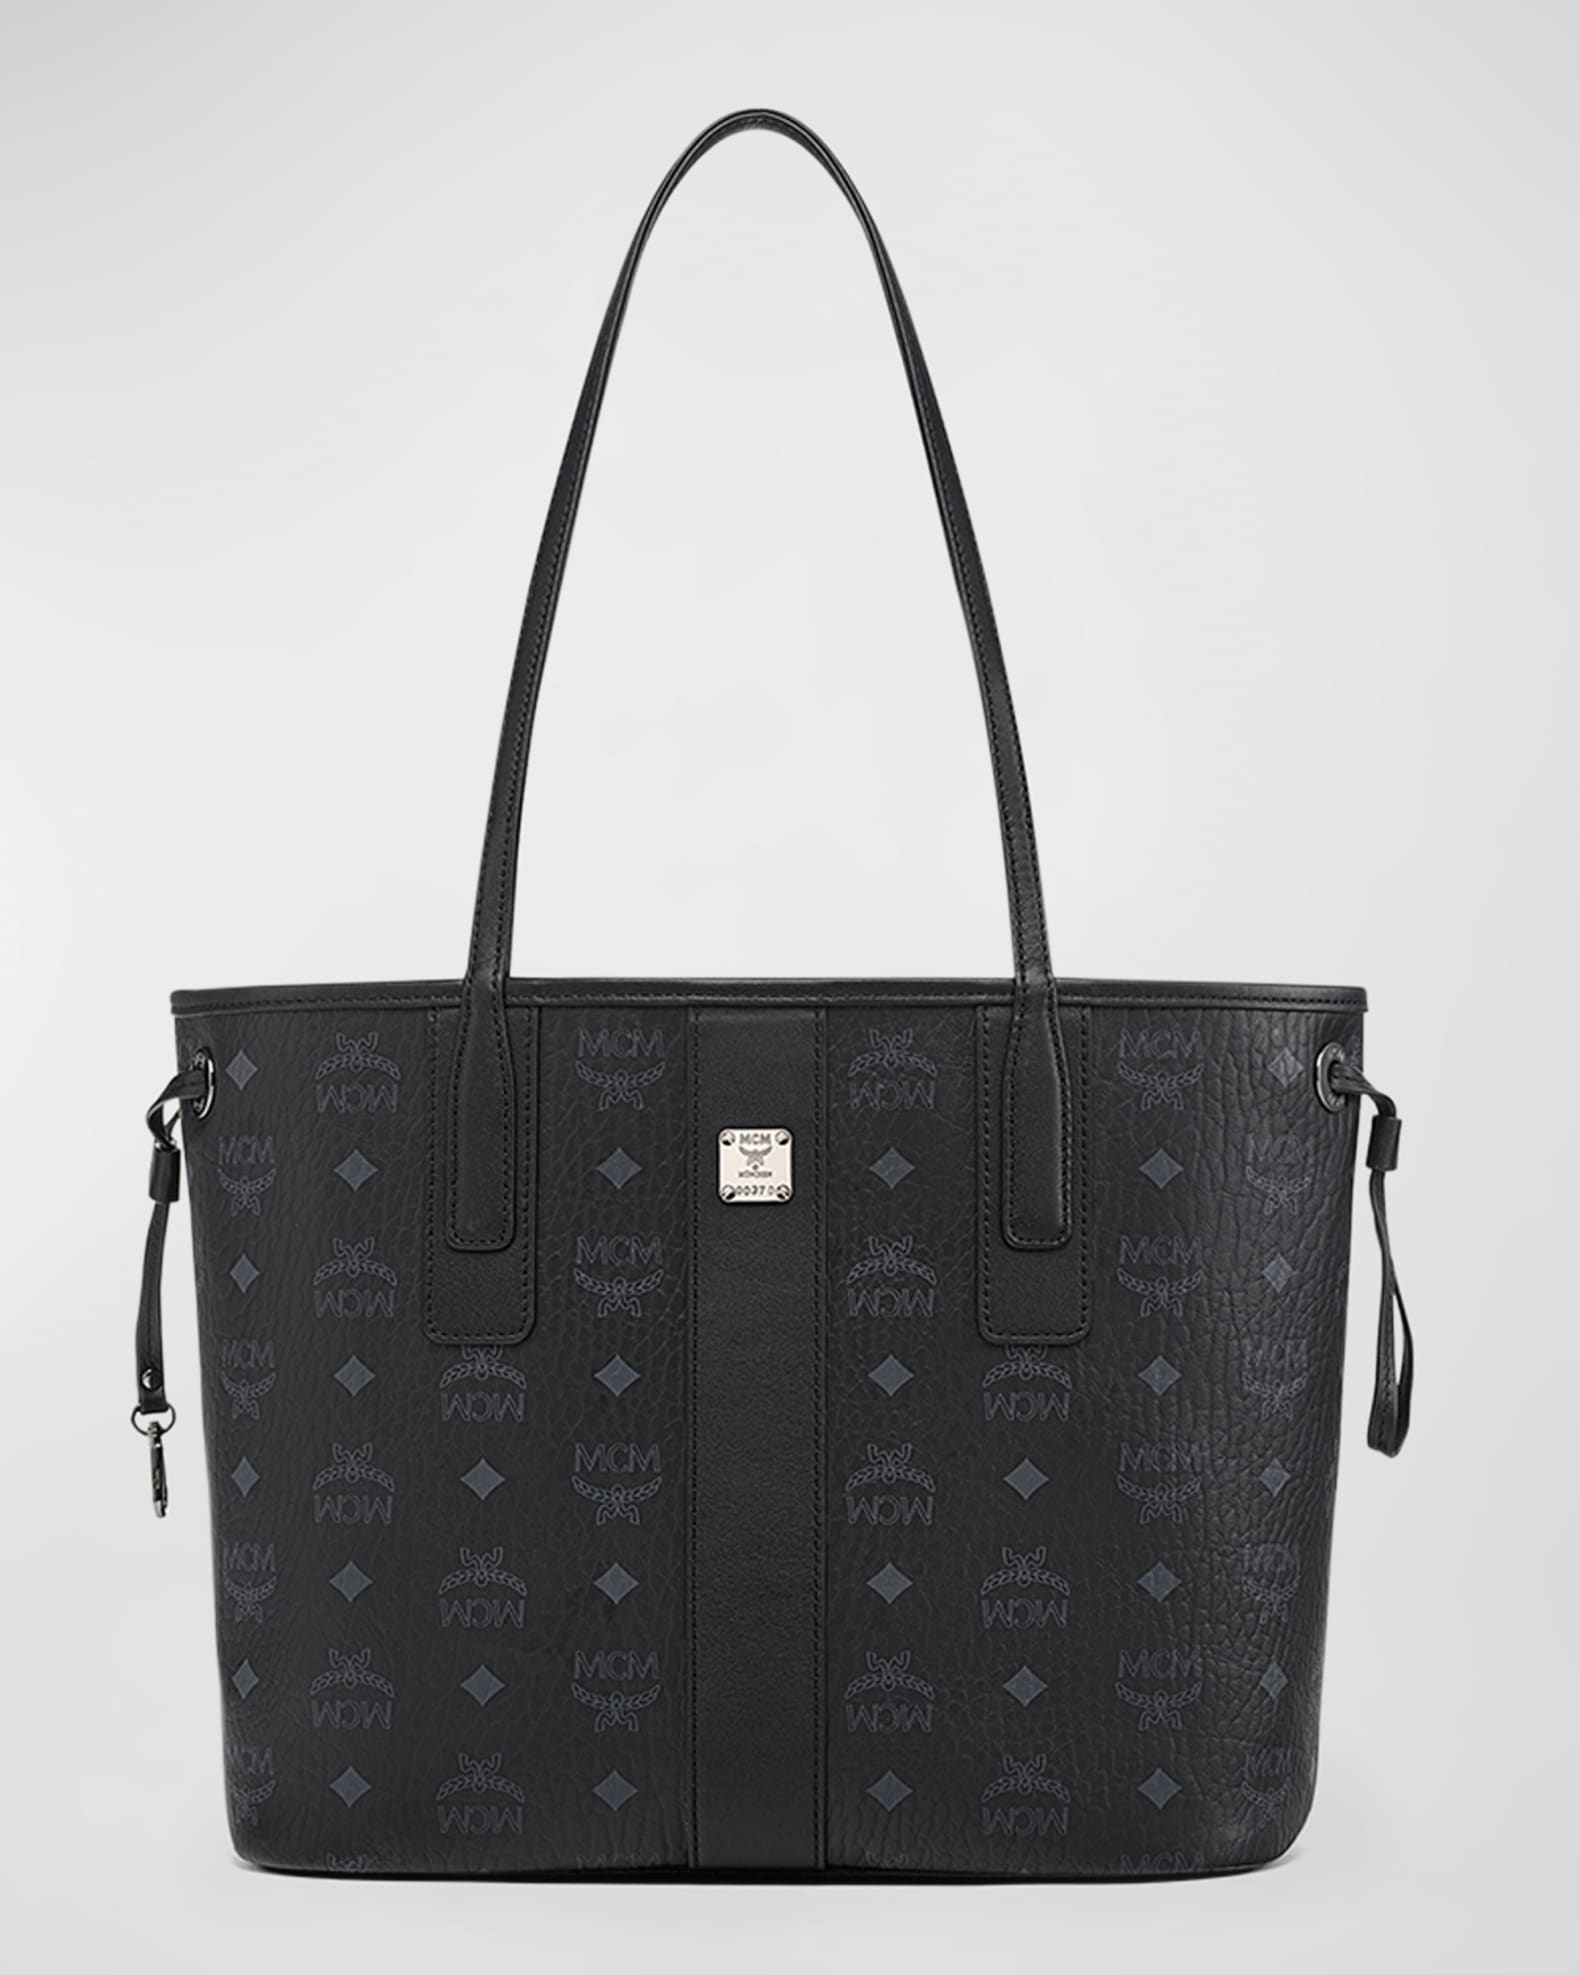 MCM Liz Small Reversible Shopper Tote Bag | Neiman Marcus